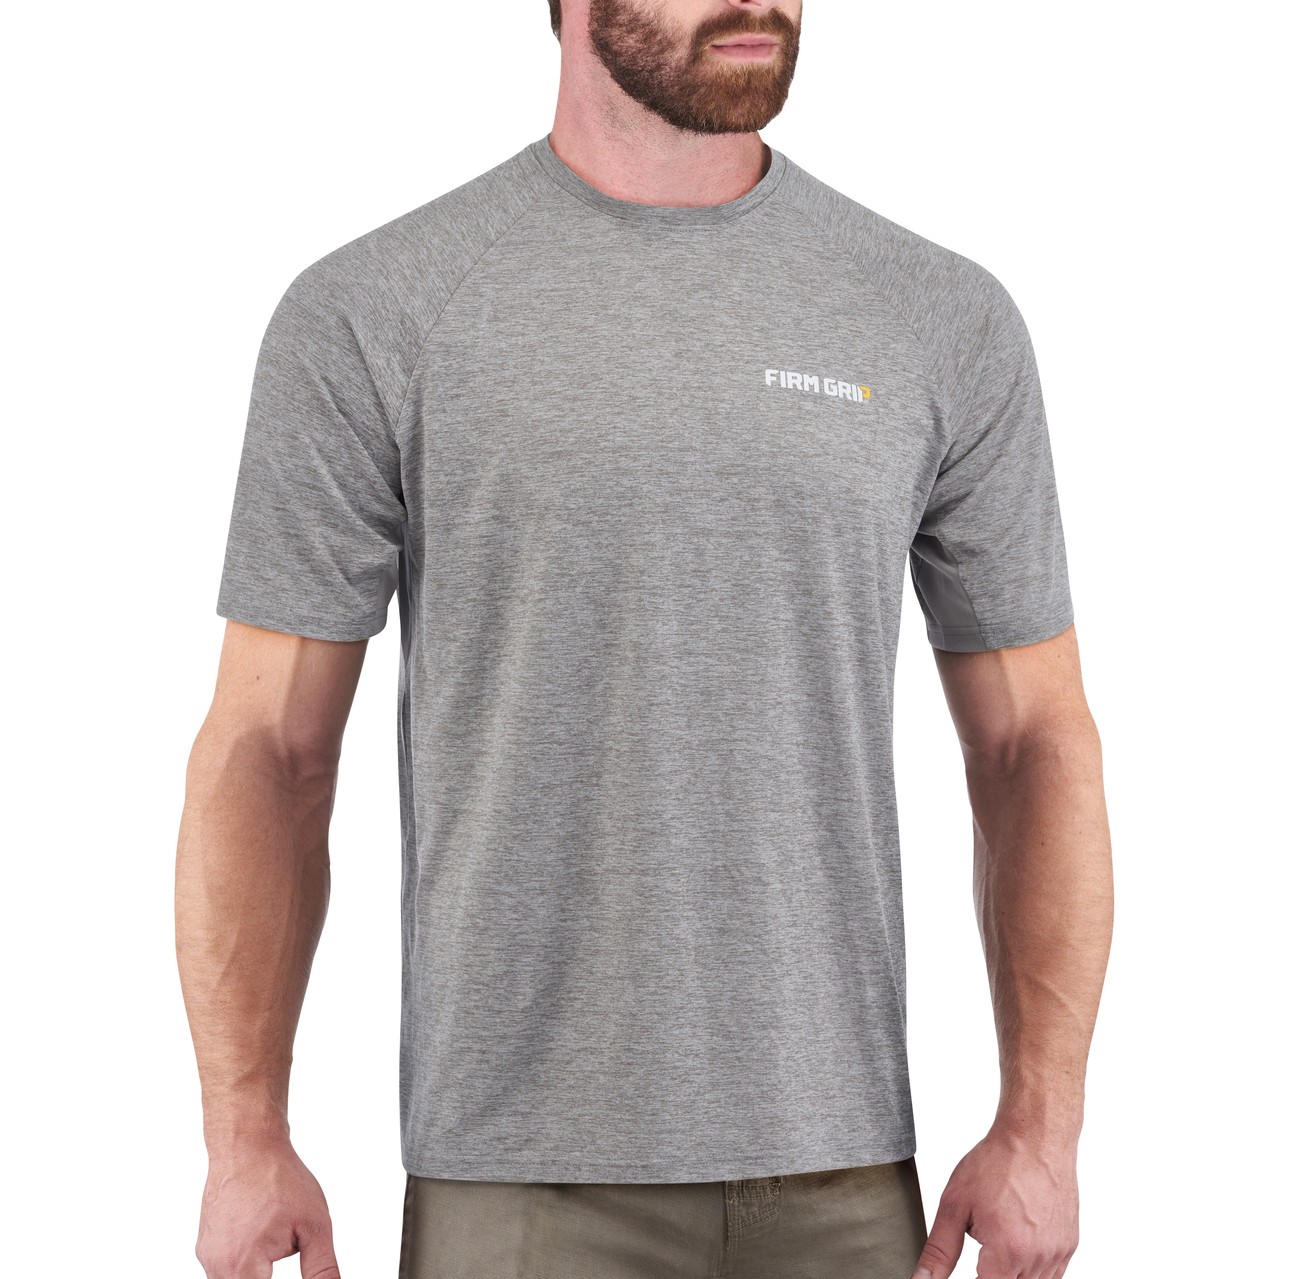 FIRM GRIP Men's Medium Gray Performance Long Sleeved Shirt 63621